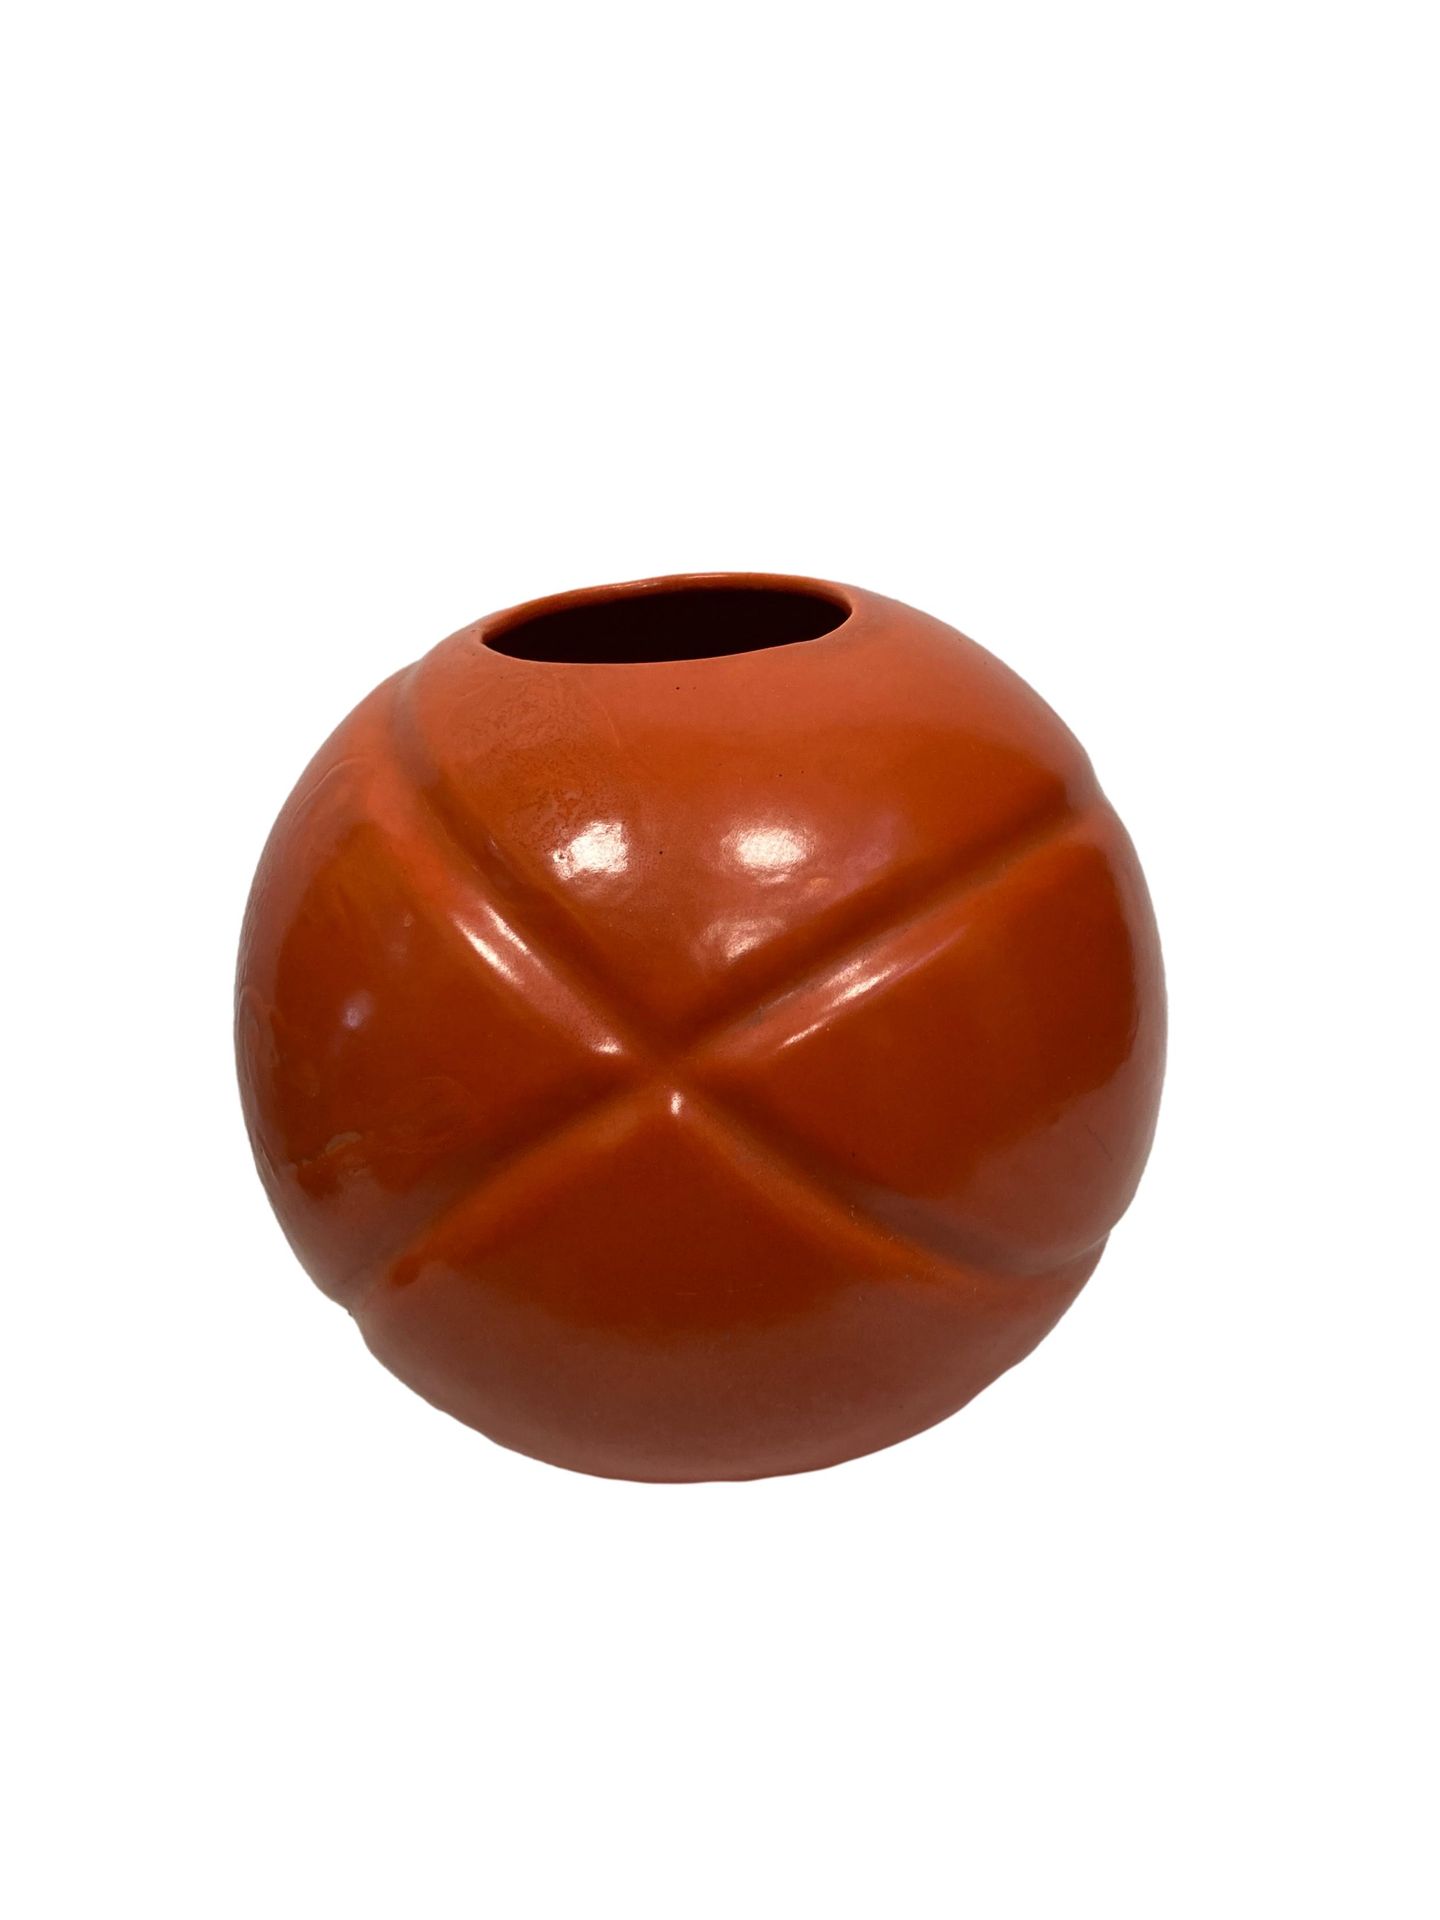 Null 史丹利

多色珊瑚釉面陶瓷球花瓶

H.23厘米